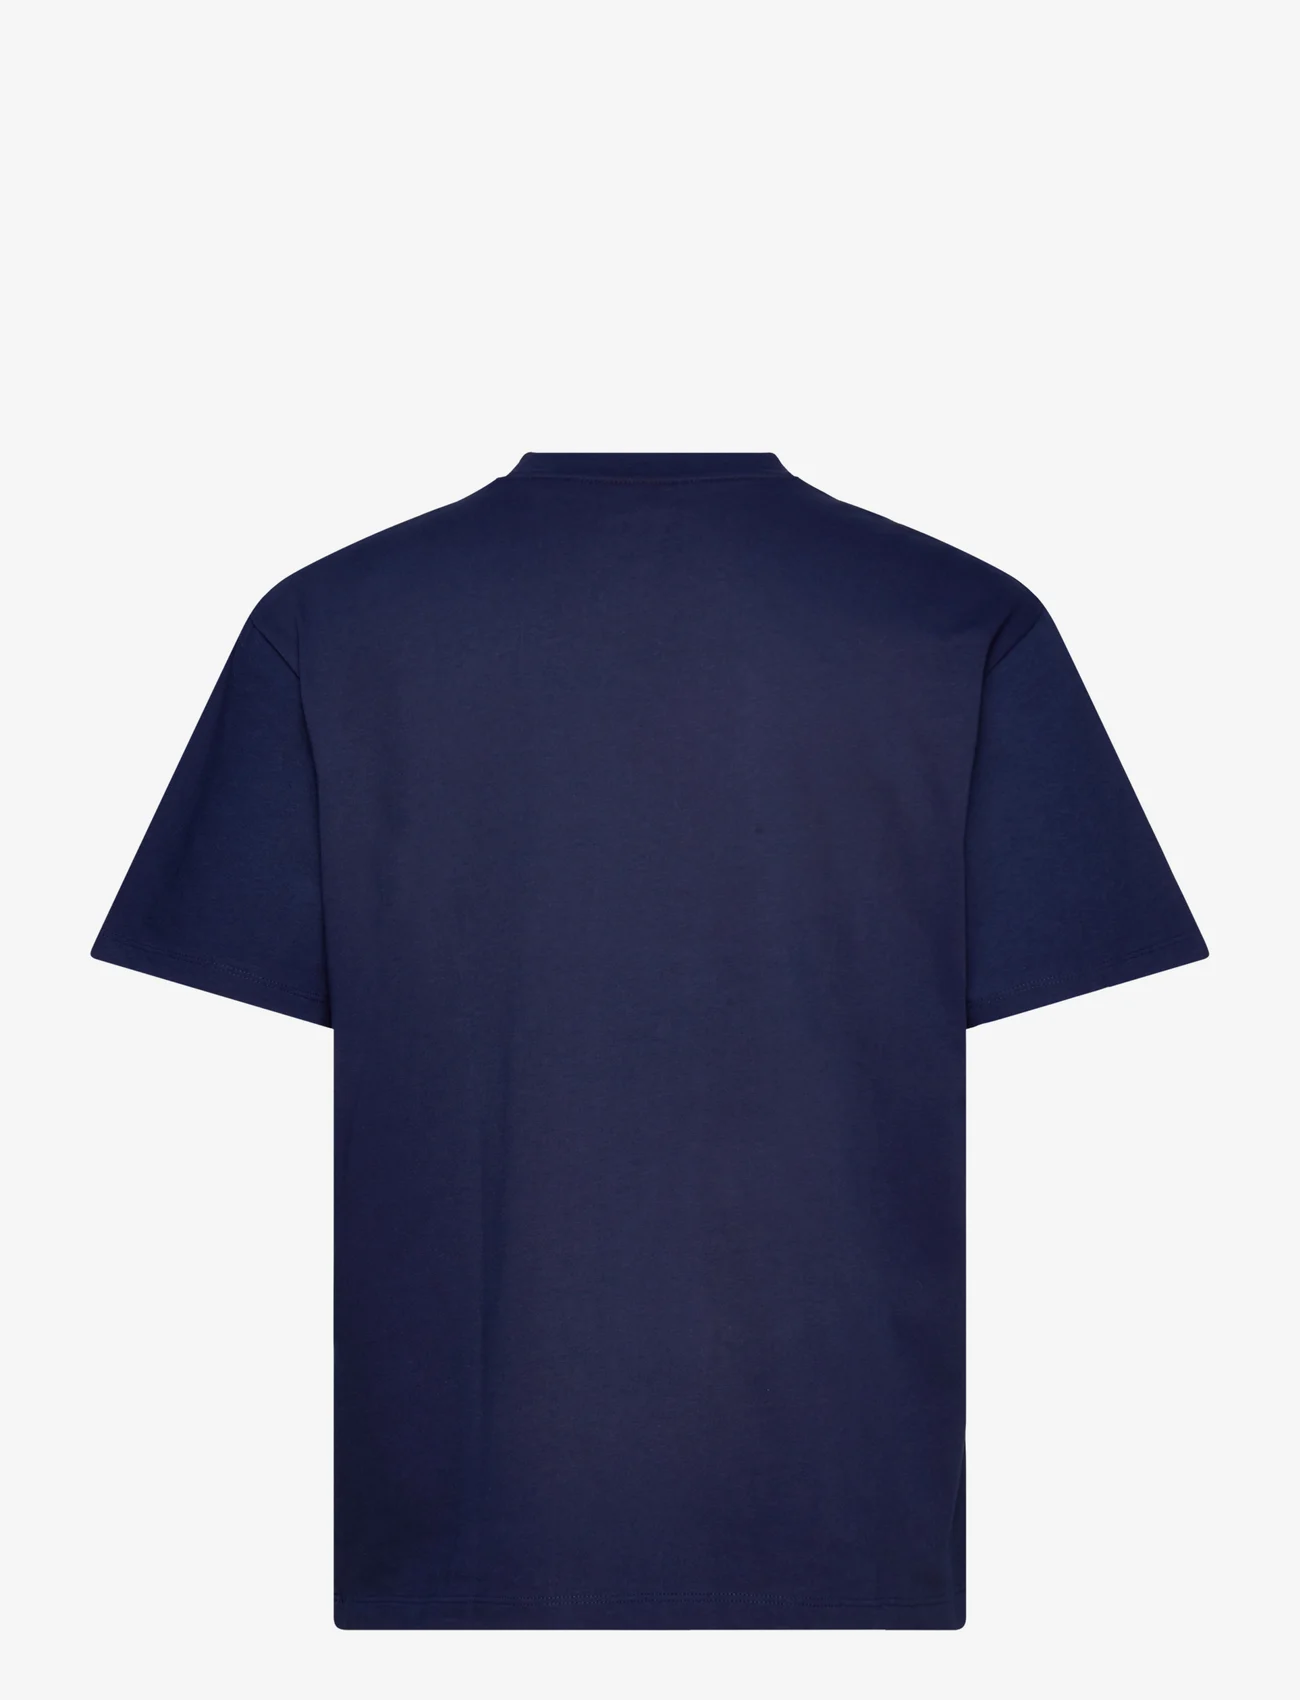 HUGO - Dapolino - basic t-shirts - navy - 1